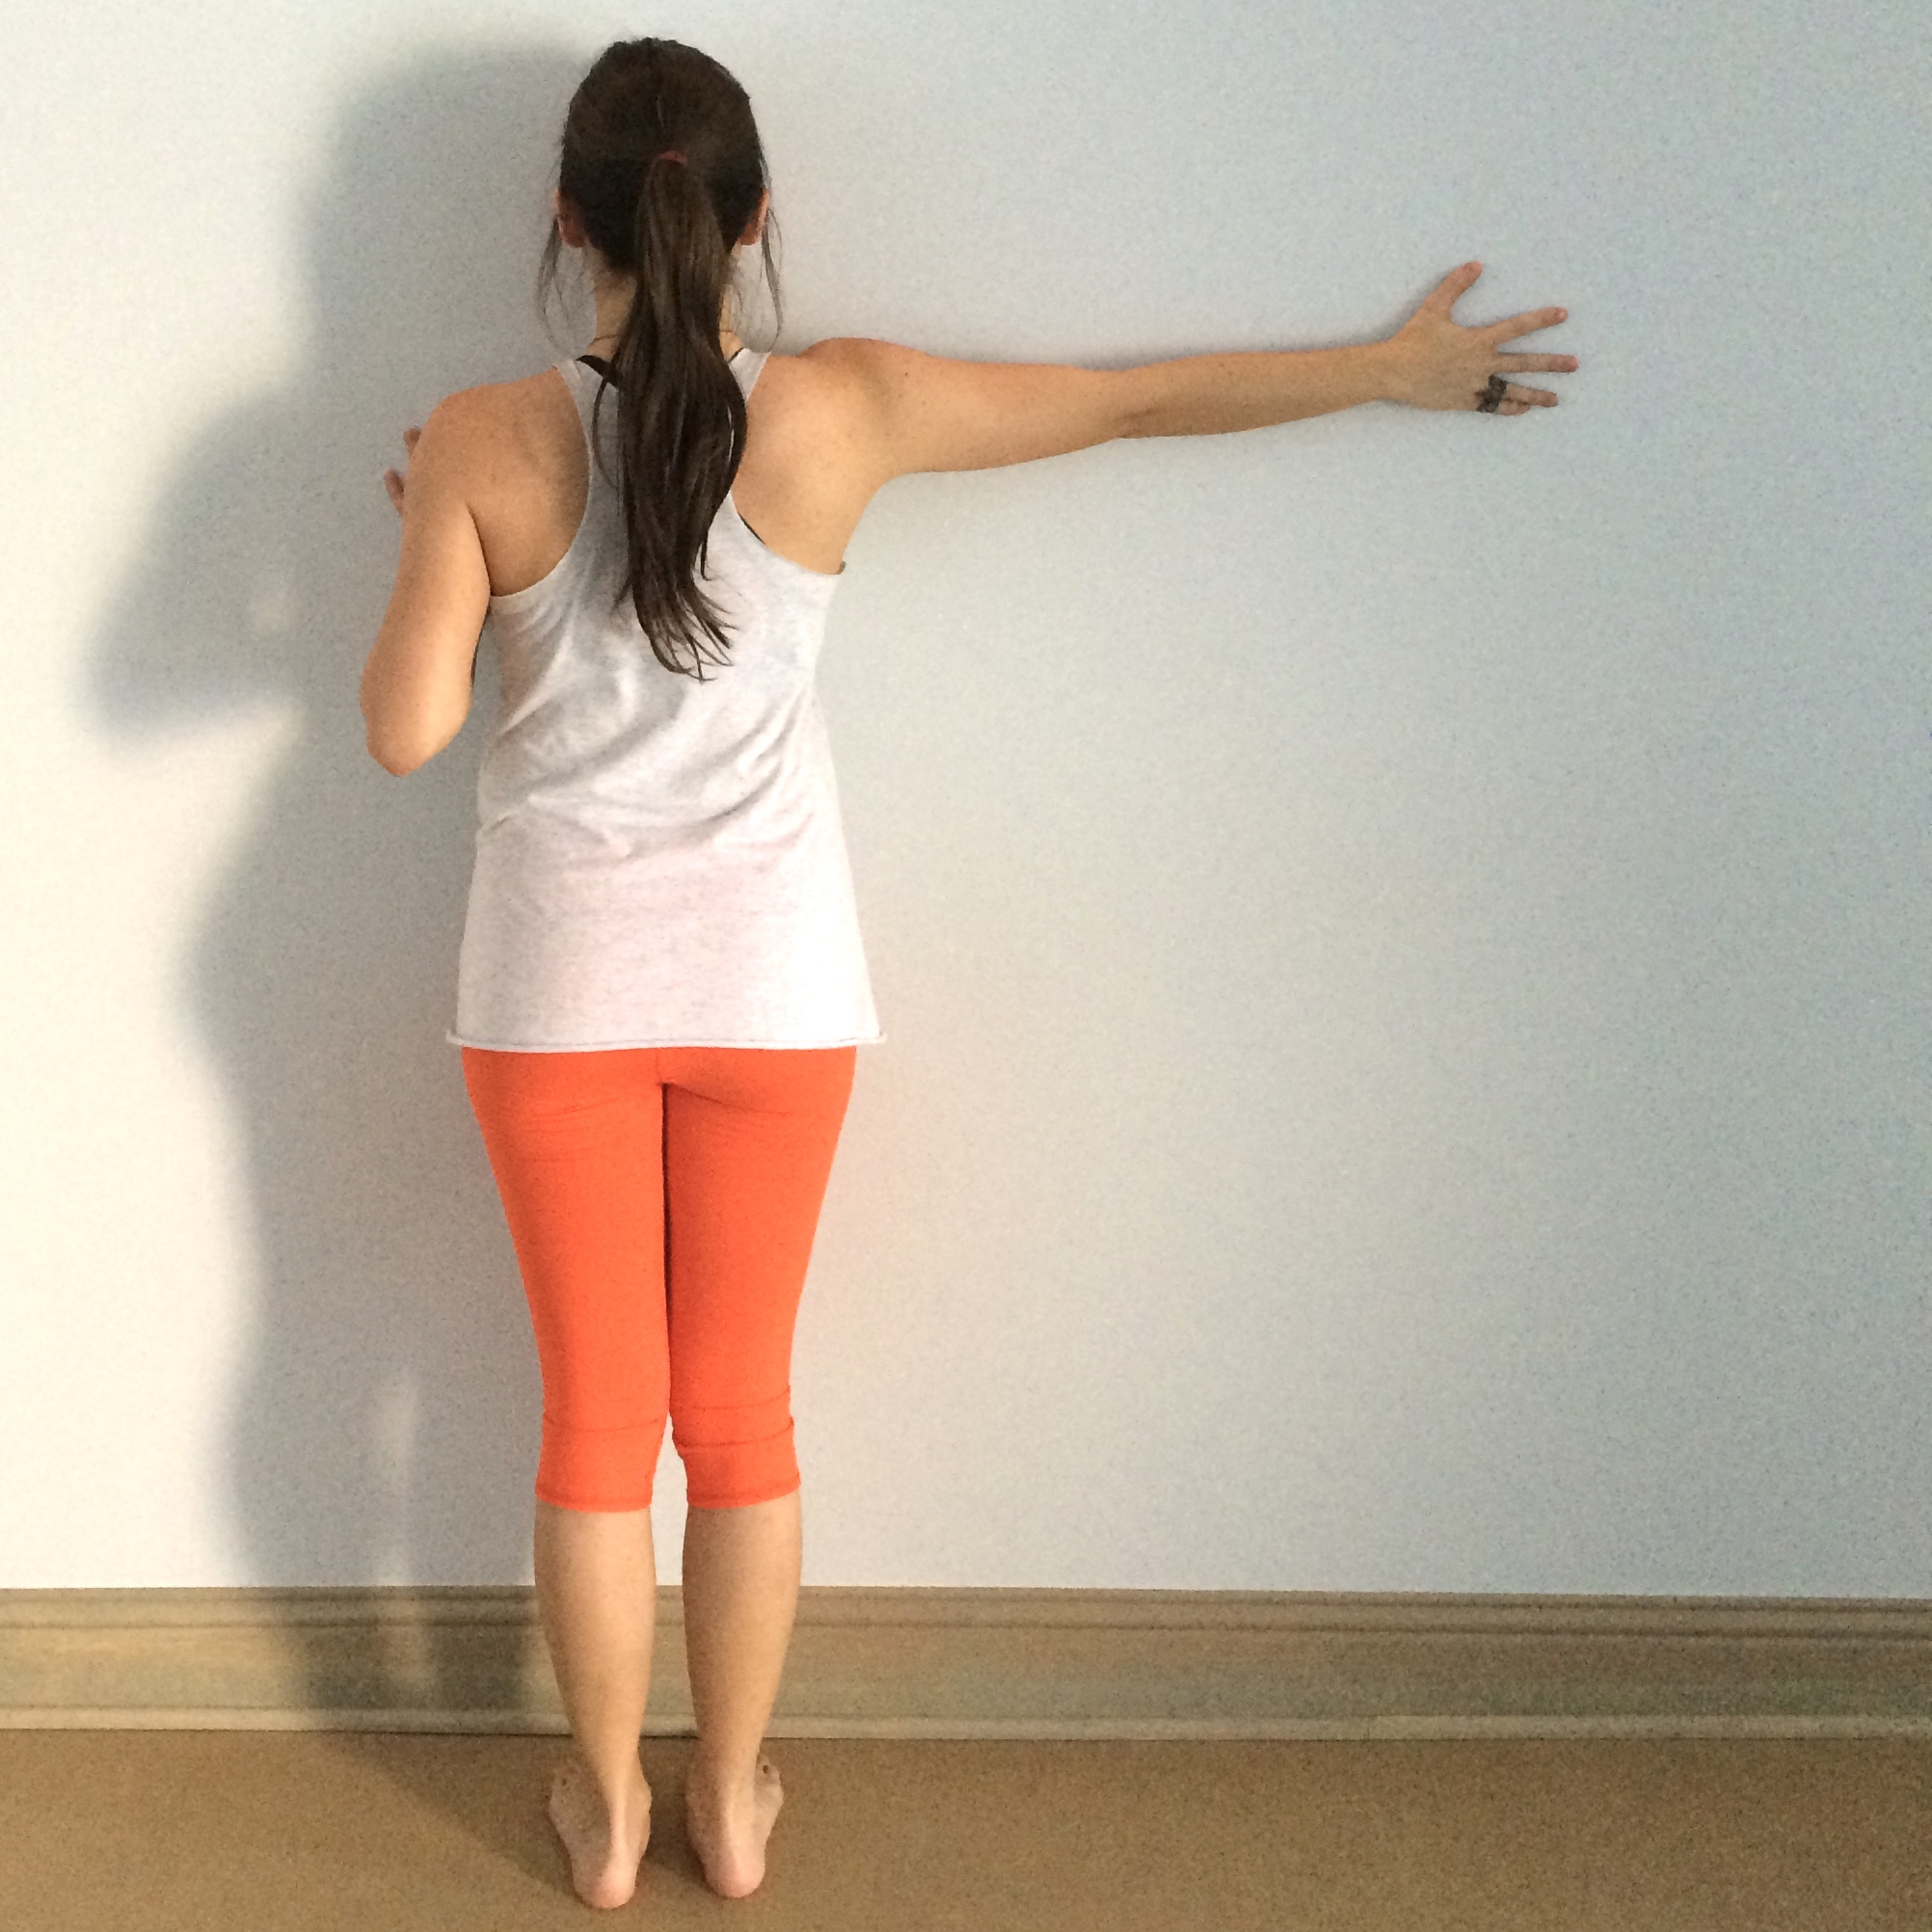 Shoulder Release Pose - Inspire Yoga